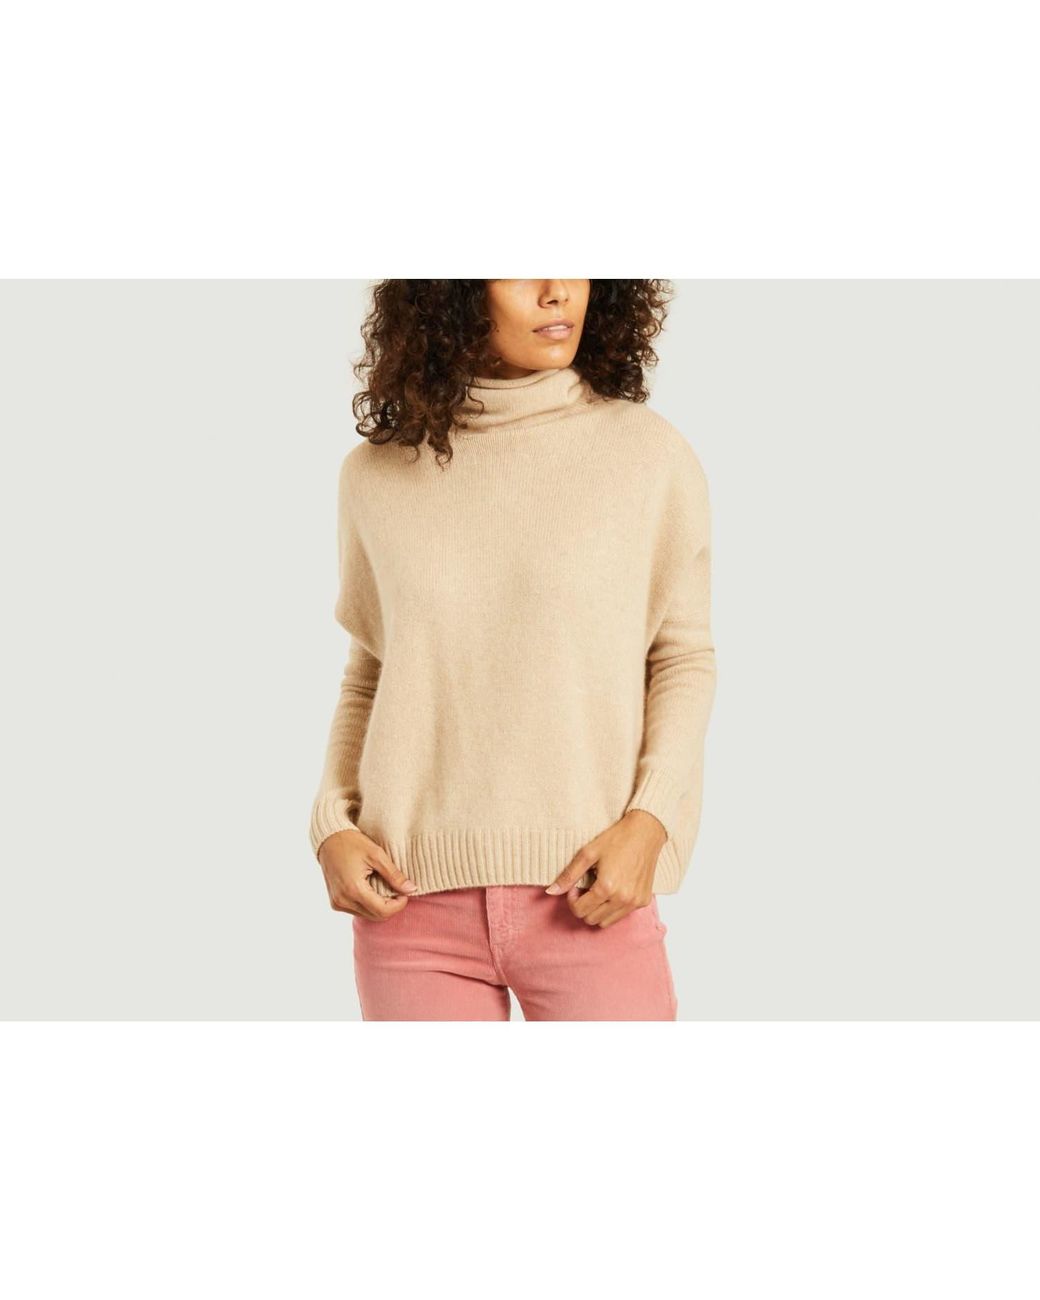 Kujten Light Beige Tila Cashmere Tunic Sweater | Lyst